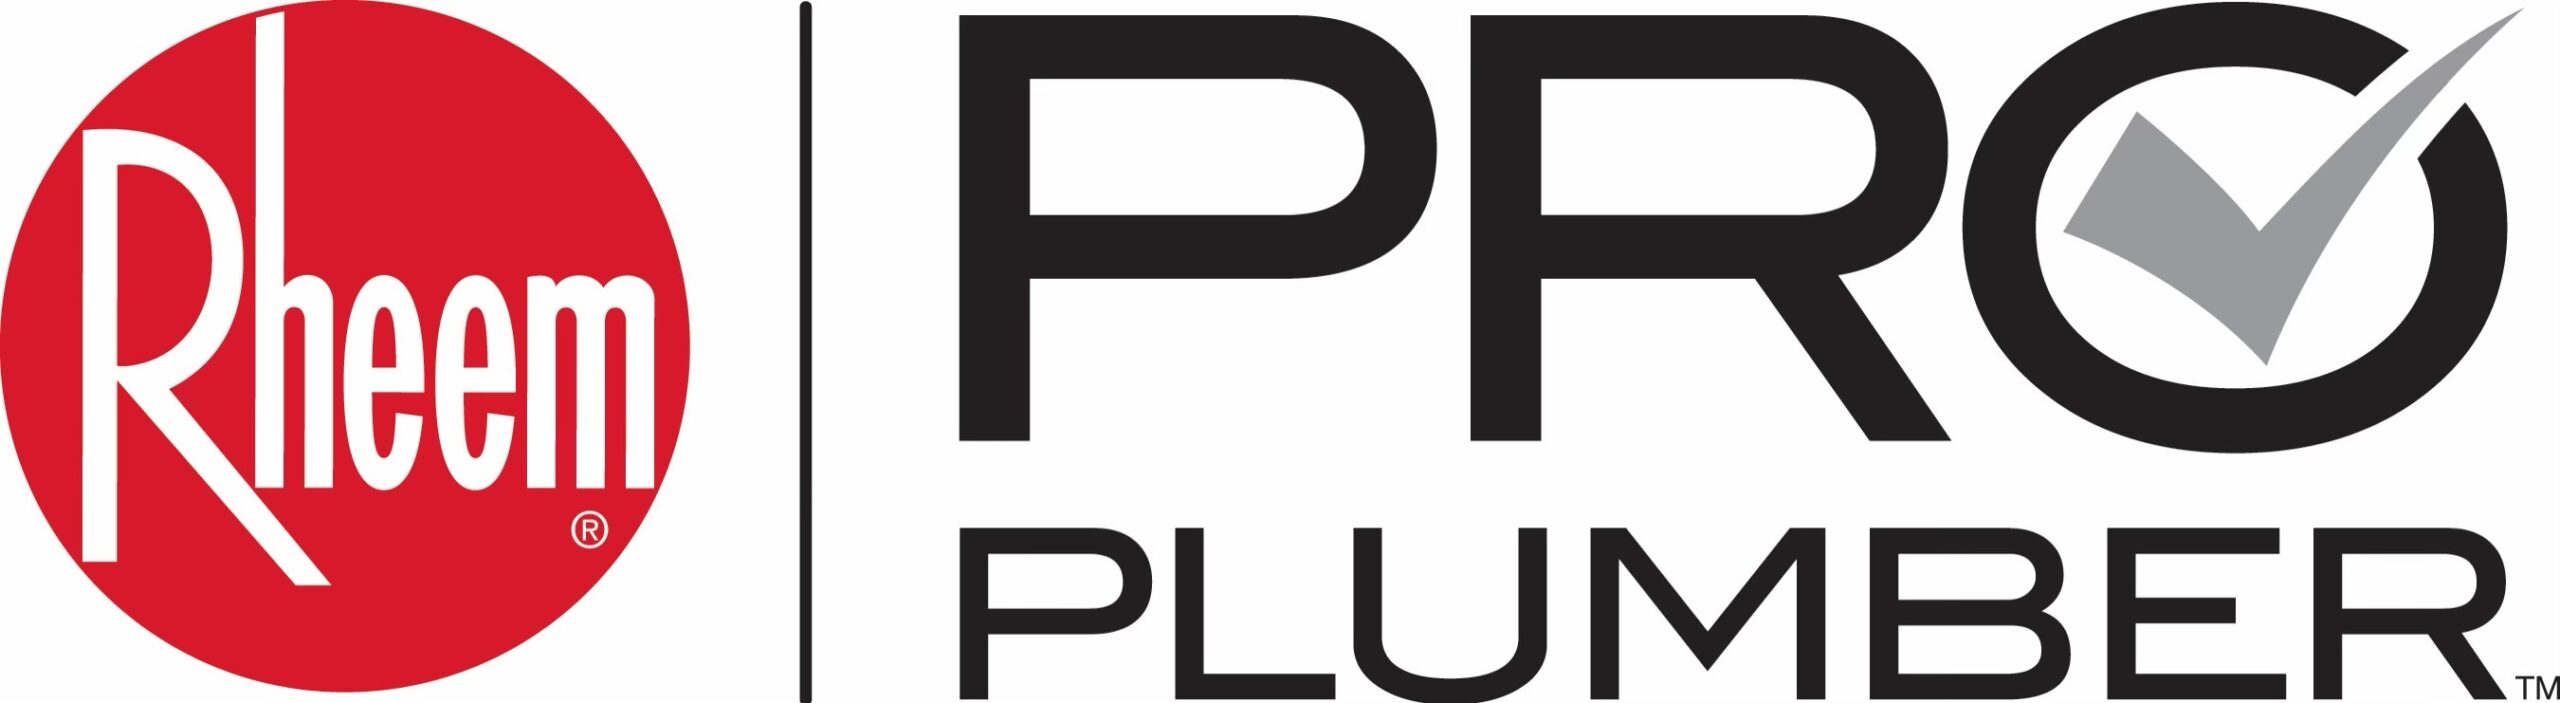 rheem-pro-plumber-badge